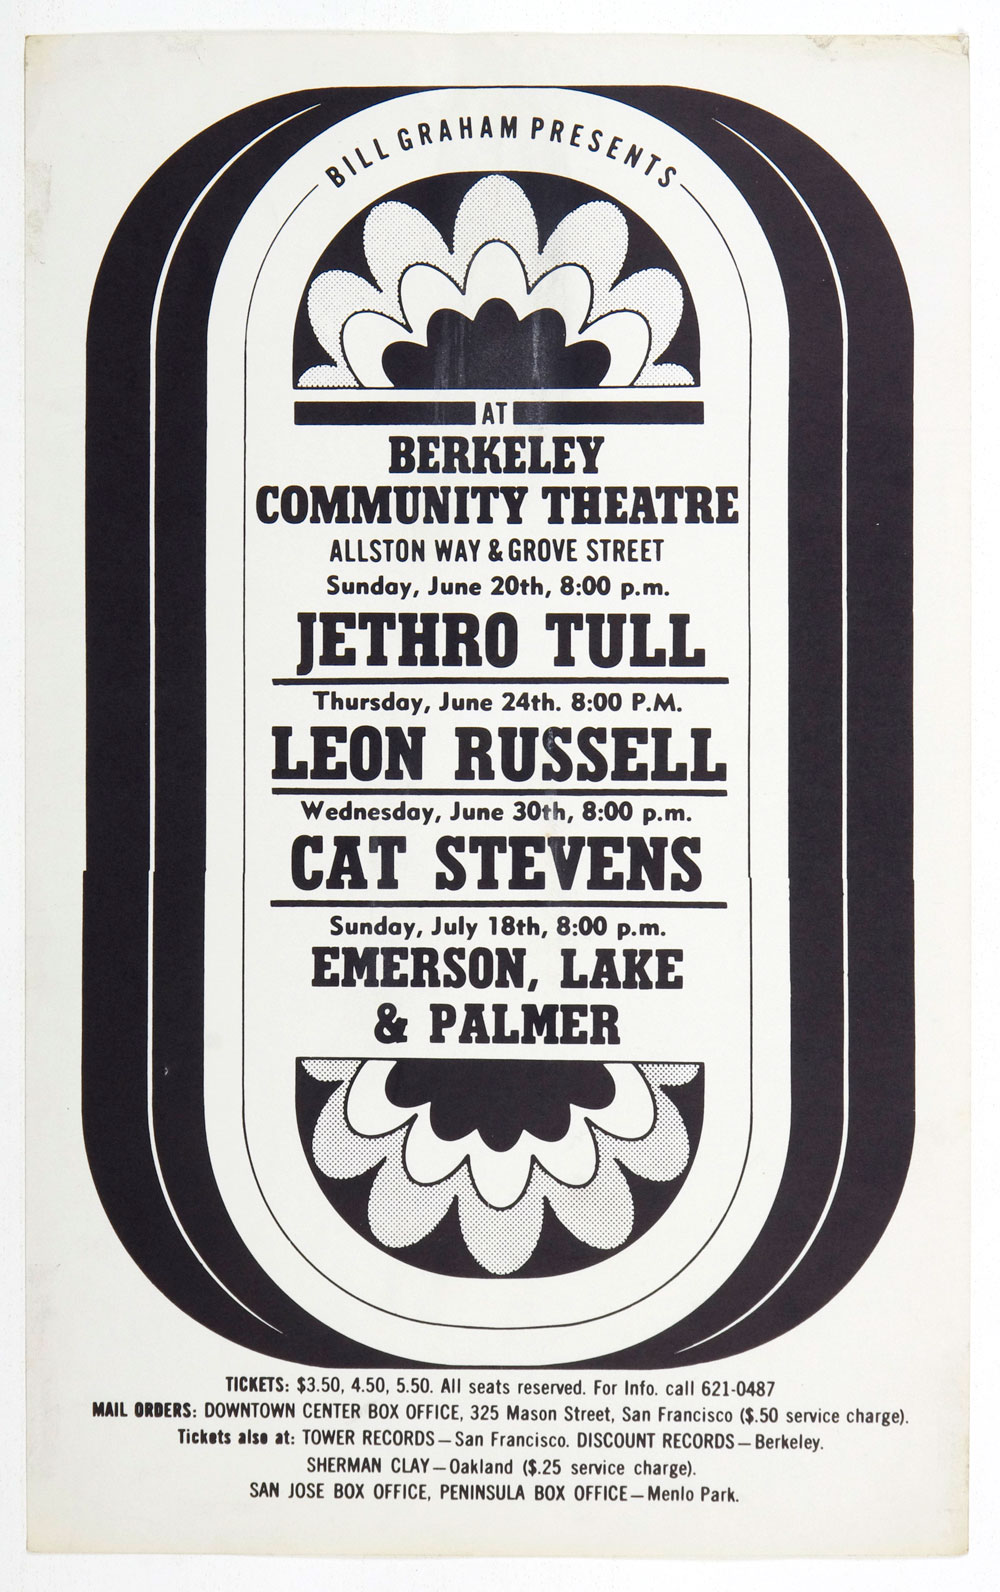 BIll Graham Presents Poster 1971 Jethro Tull Cat Stevense Berkeley Community Theatre